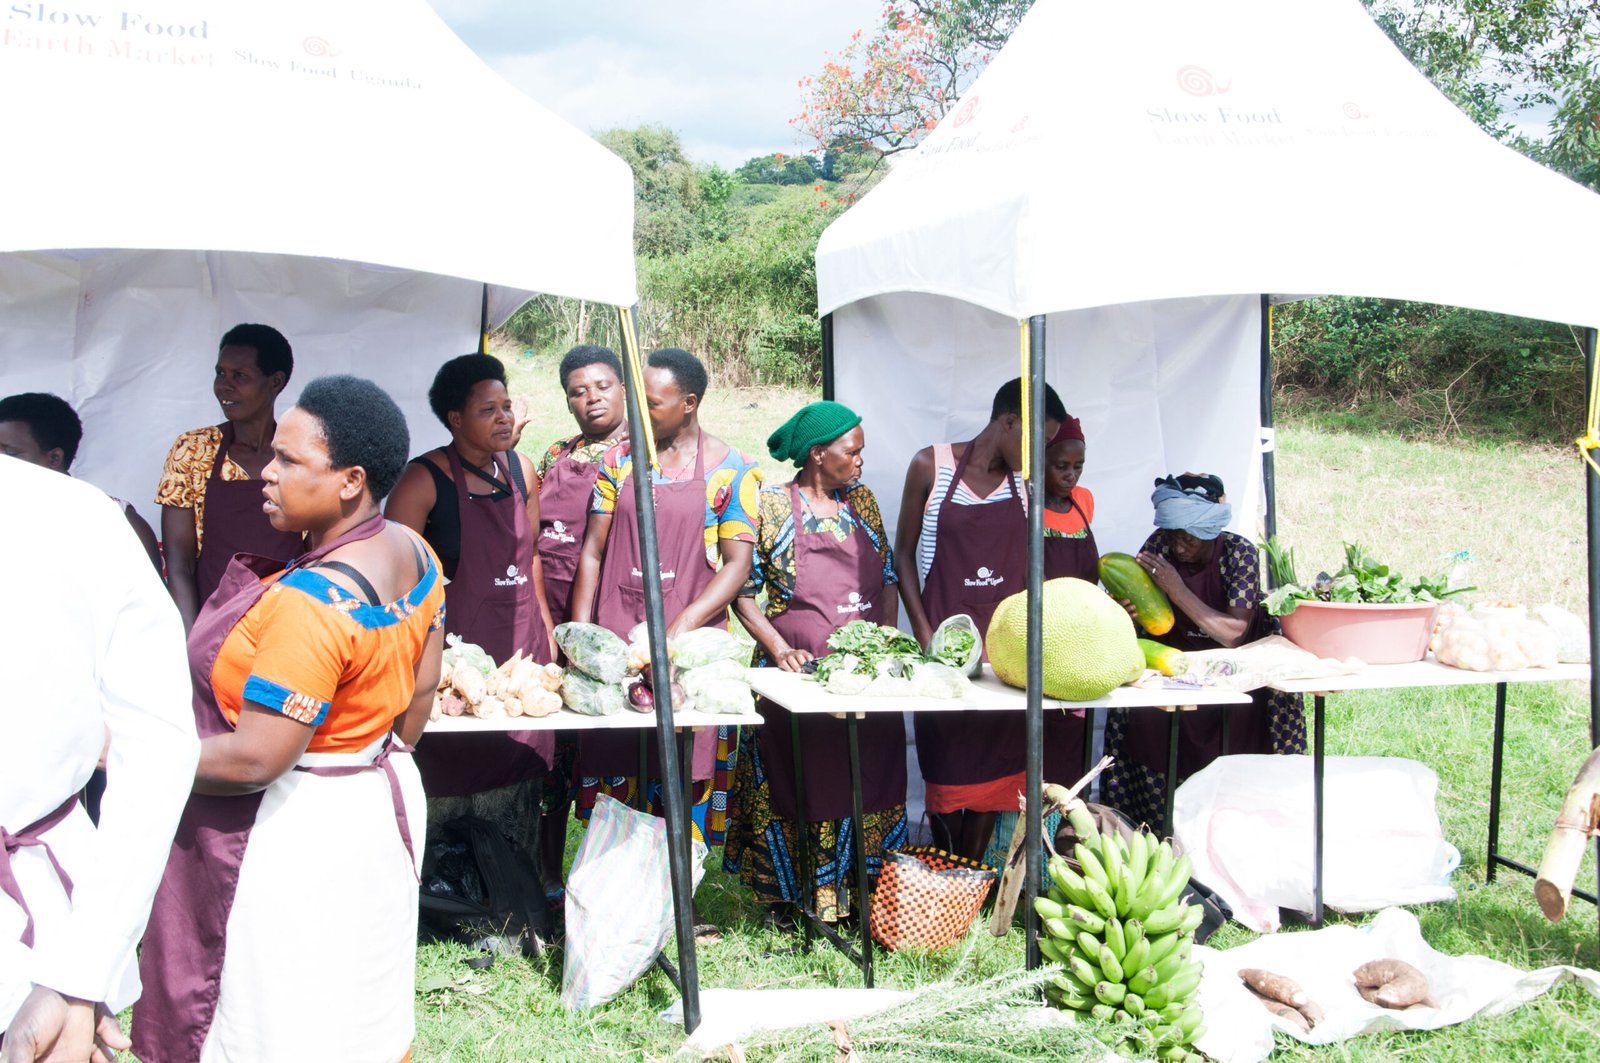 SLOW FOOD CELEBRATES THE OPENING OF THE 6TH EARTH MARKET IN UGANDA IN BWIZIBWERA-RUTOOMA